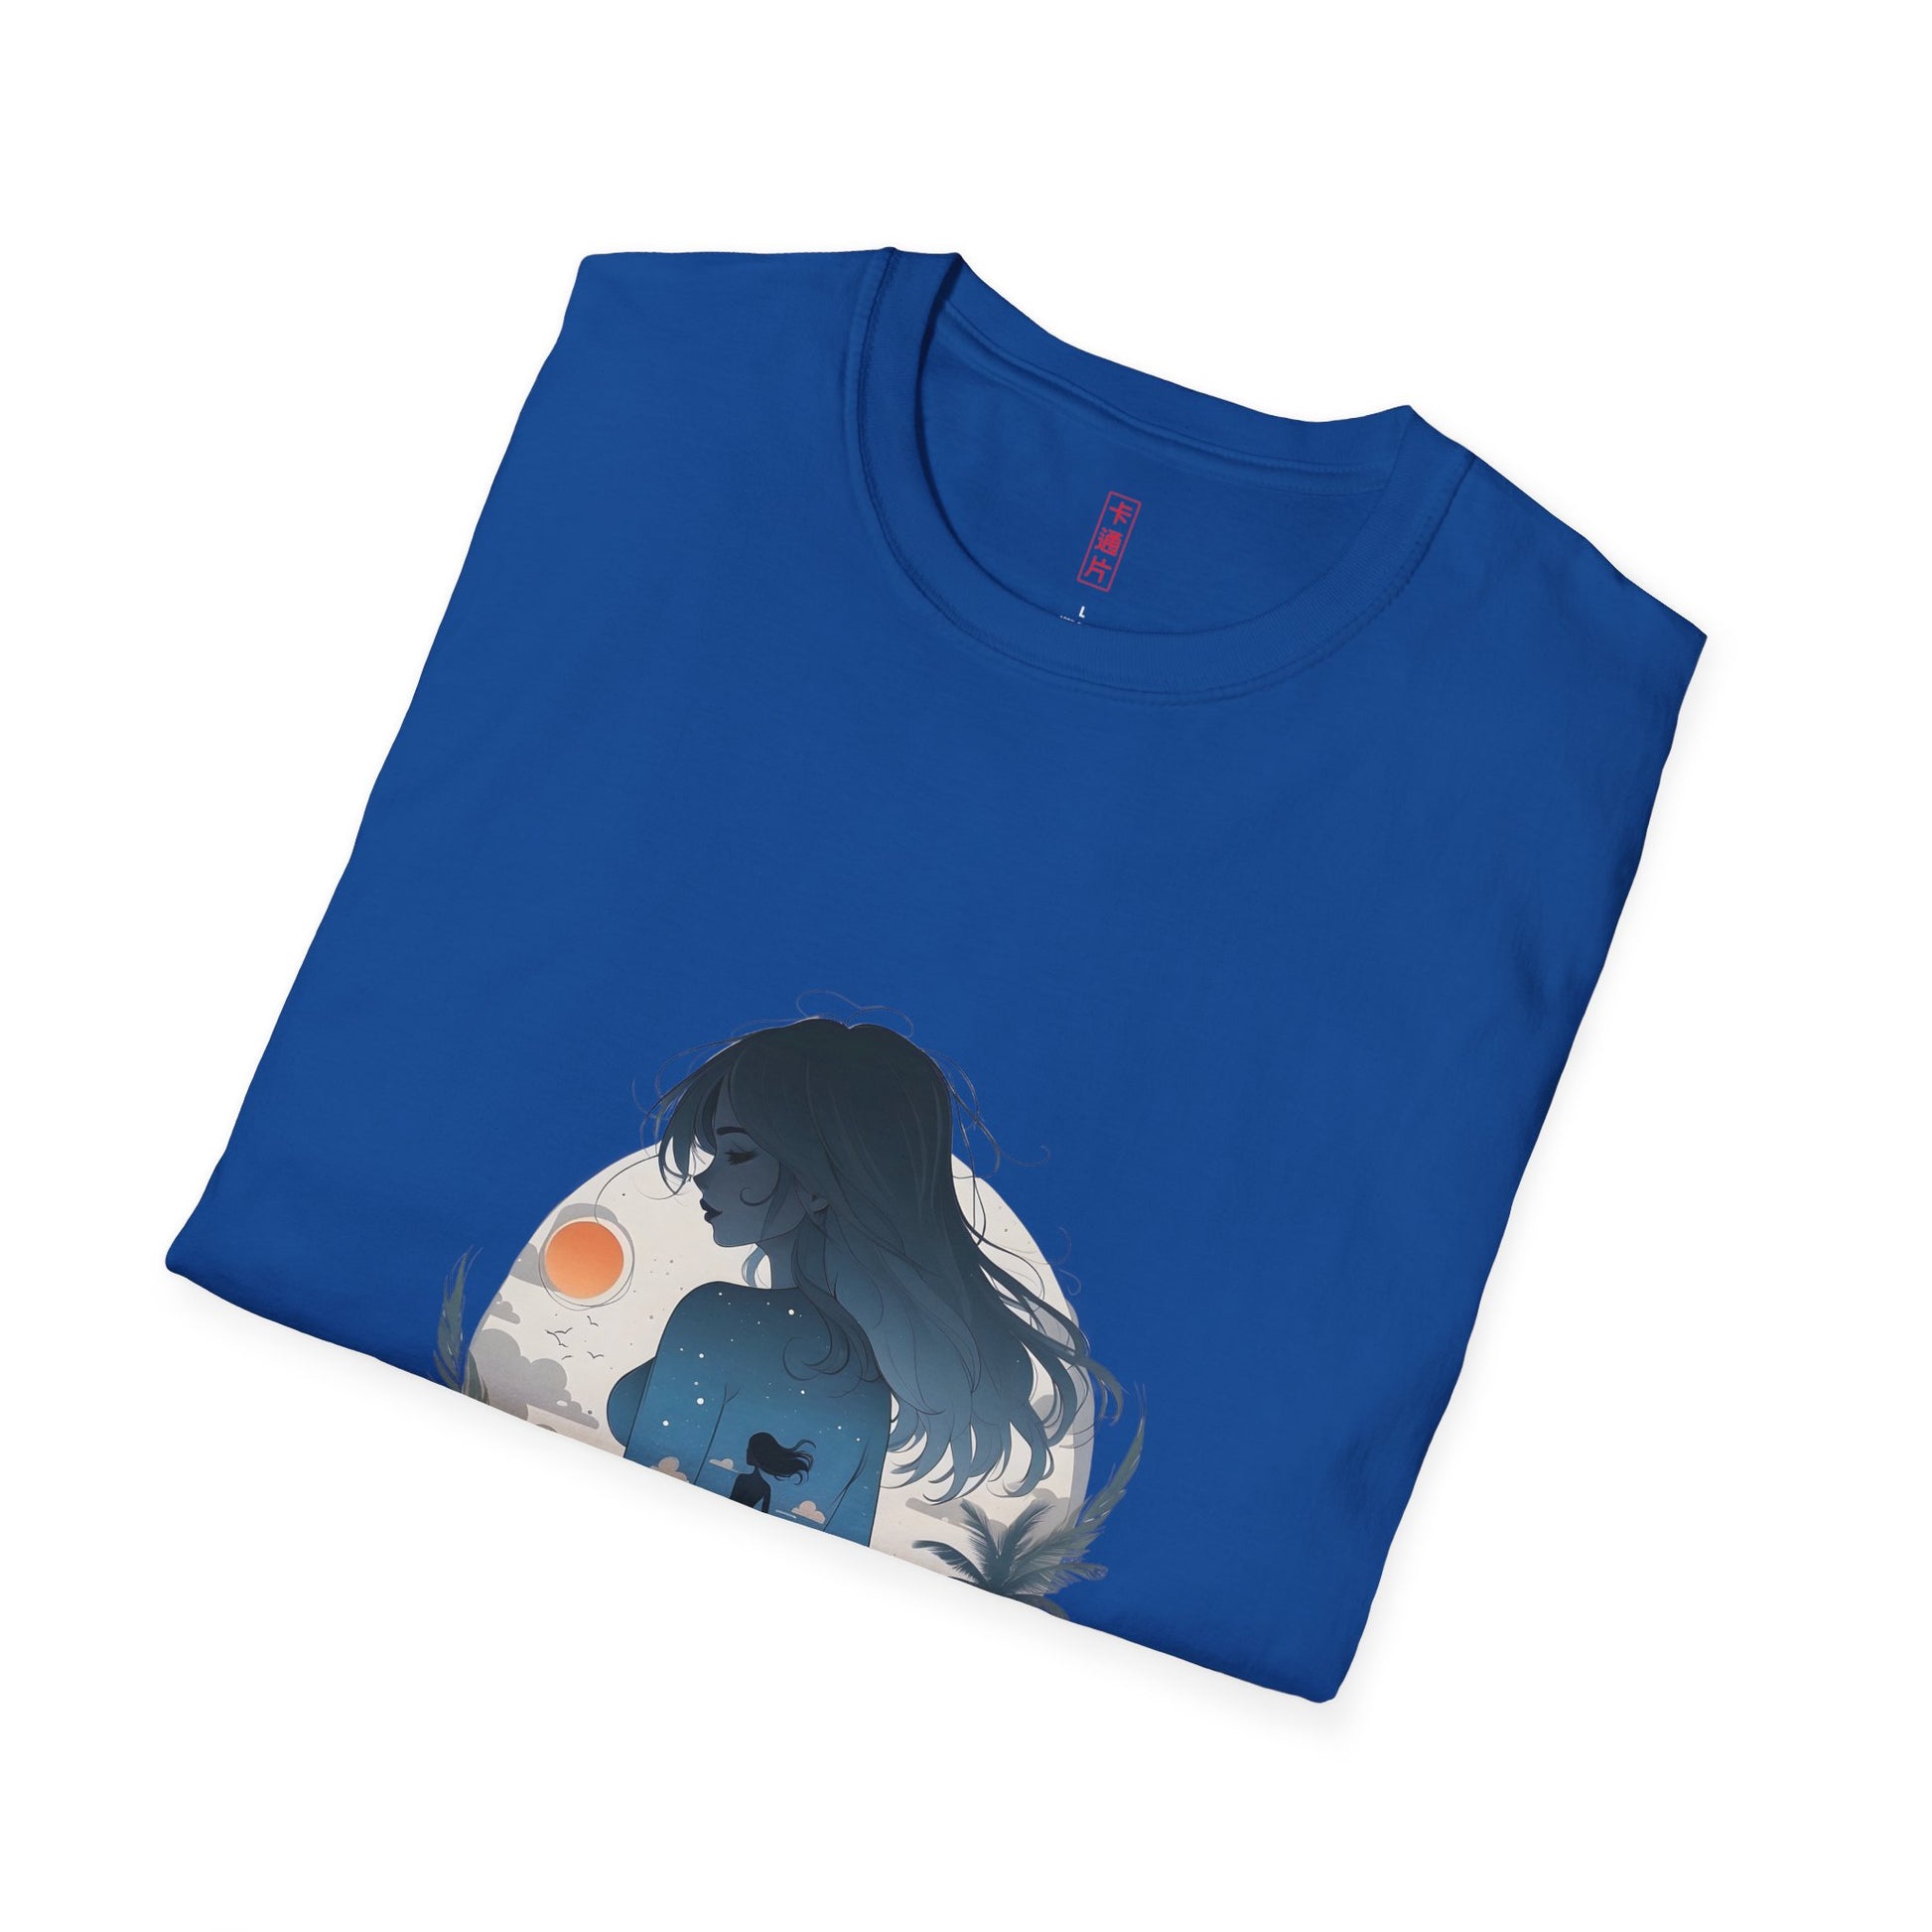 Kǎtōng Piàn - California Love Collection - 026 - Unisex Softstyle T-Shirt Printify